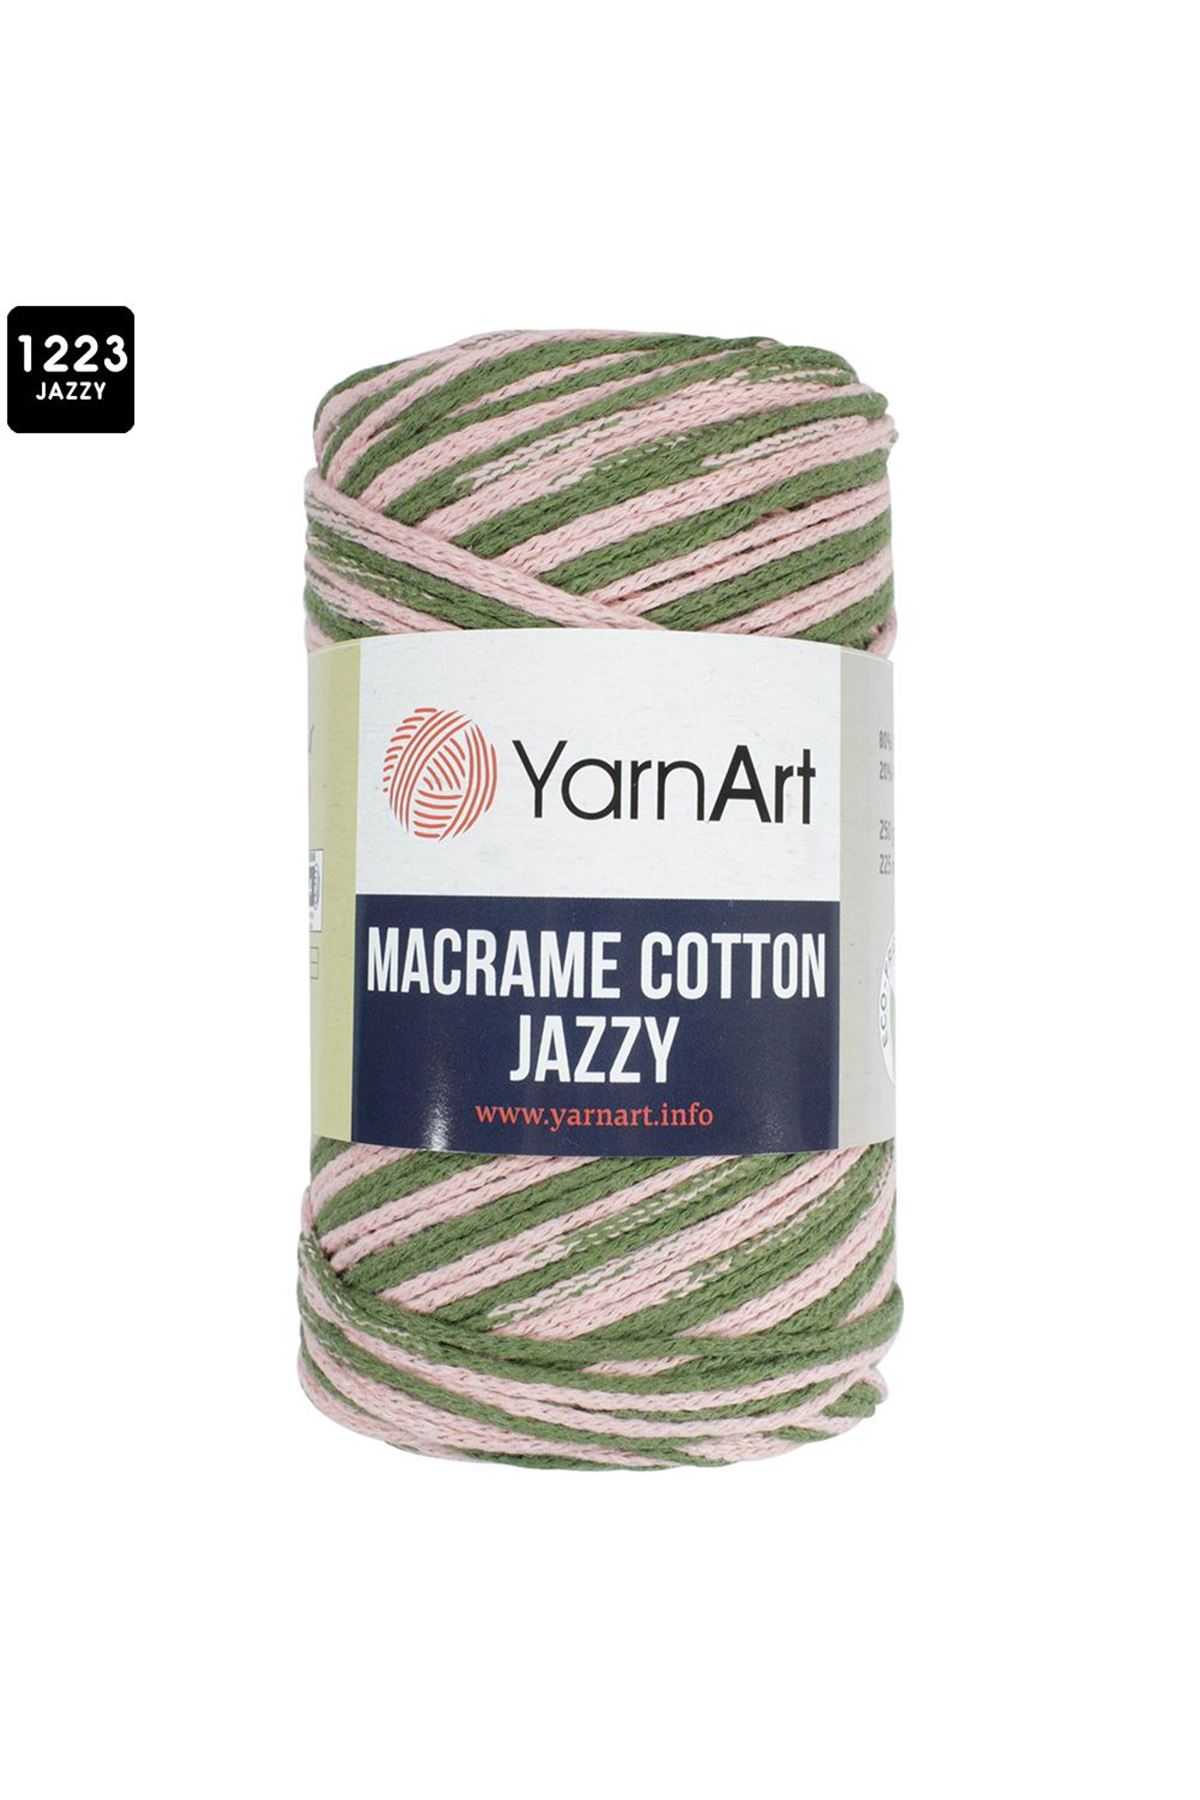 Yarnart Macrame Cotton Jazzy Renk No:1223